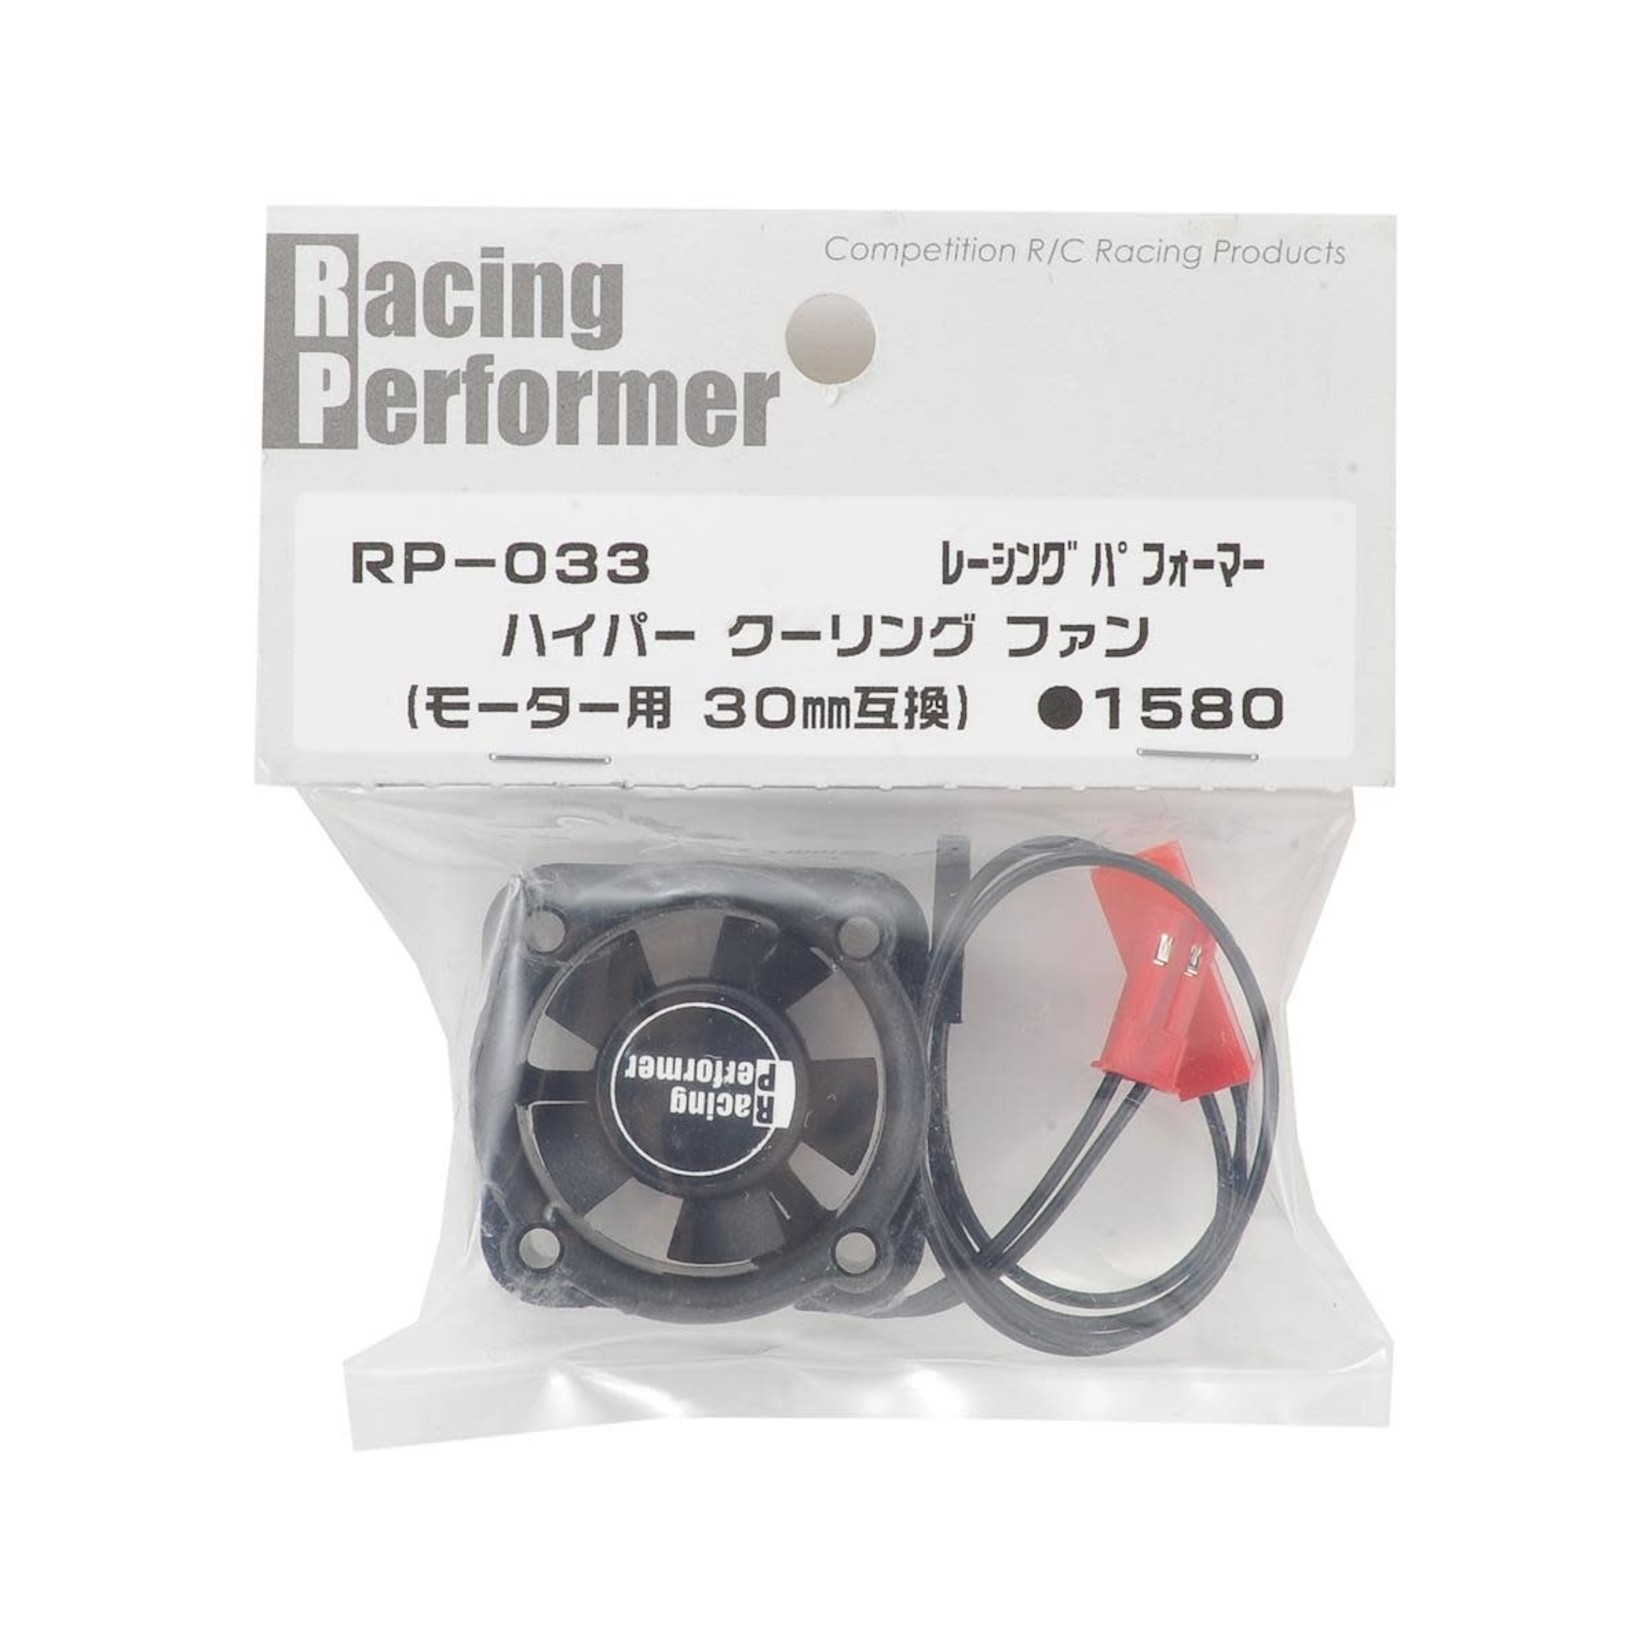 Yokomo Yokomo 30x30x10mm Racing Performer HYPER Cooling fan #YOKRP-033